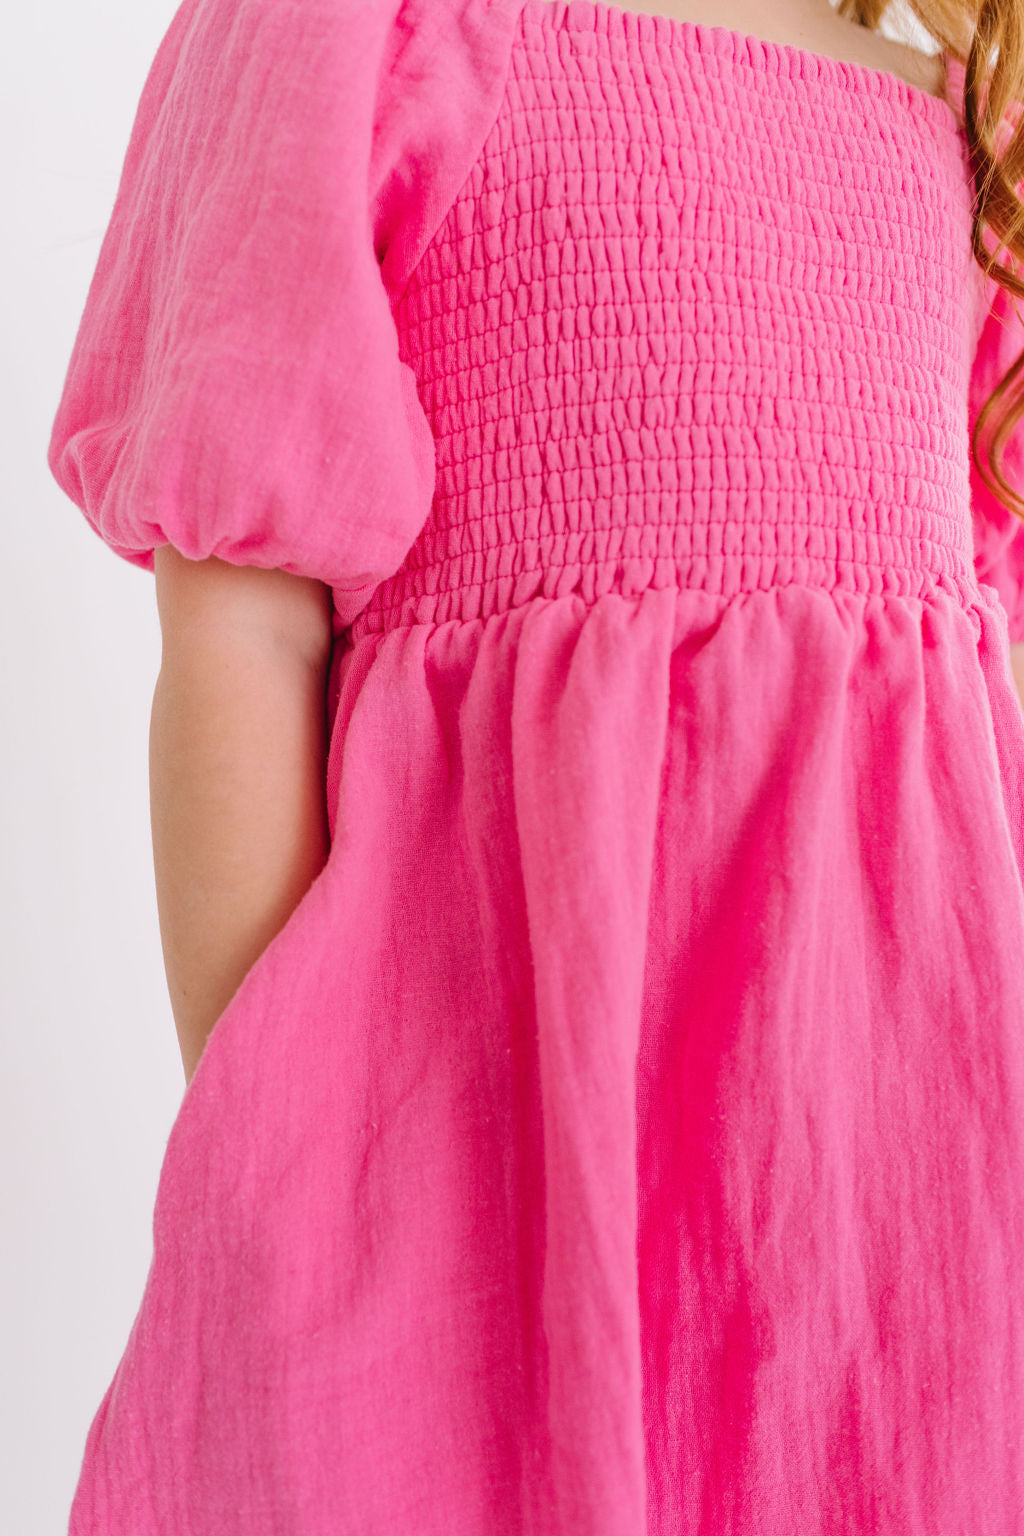 Short Puff Sleeve Smocked Twirly Dress in Azalea Pink